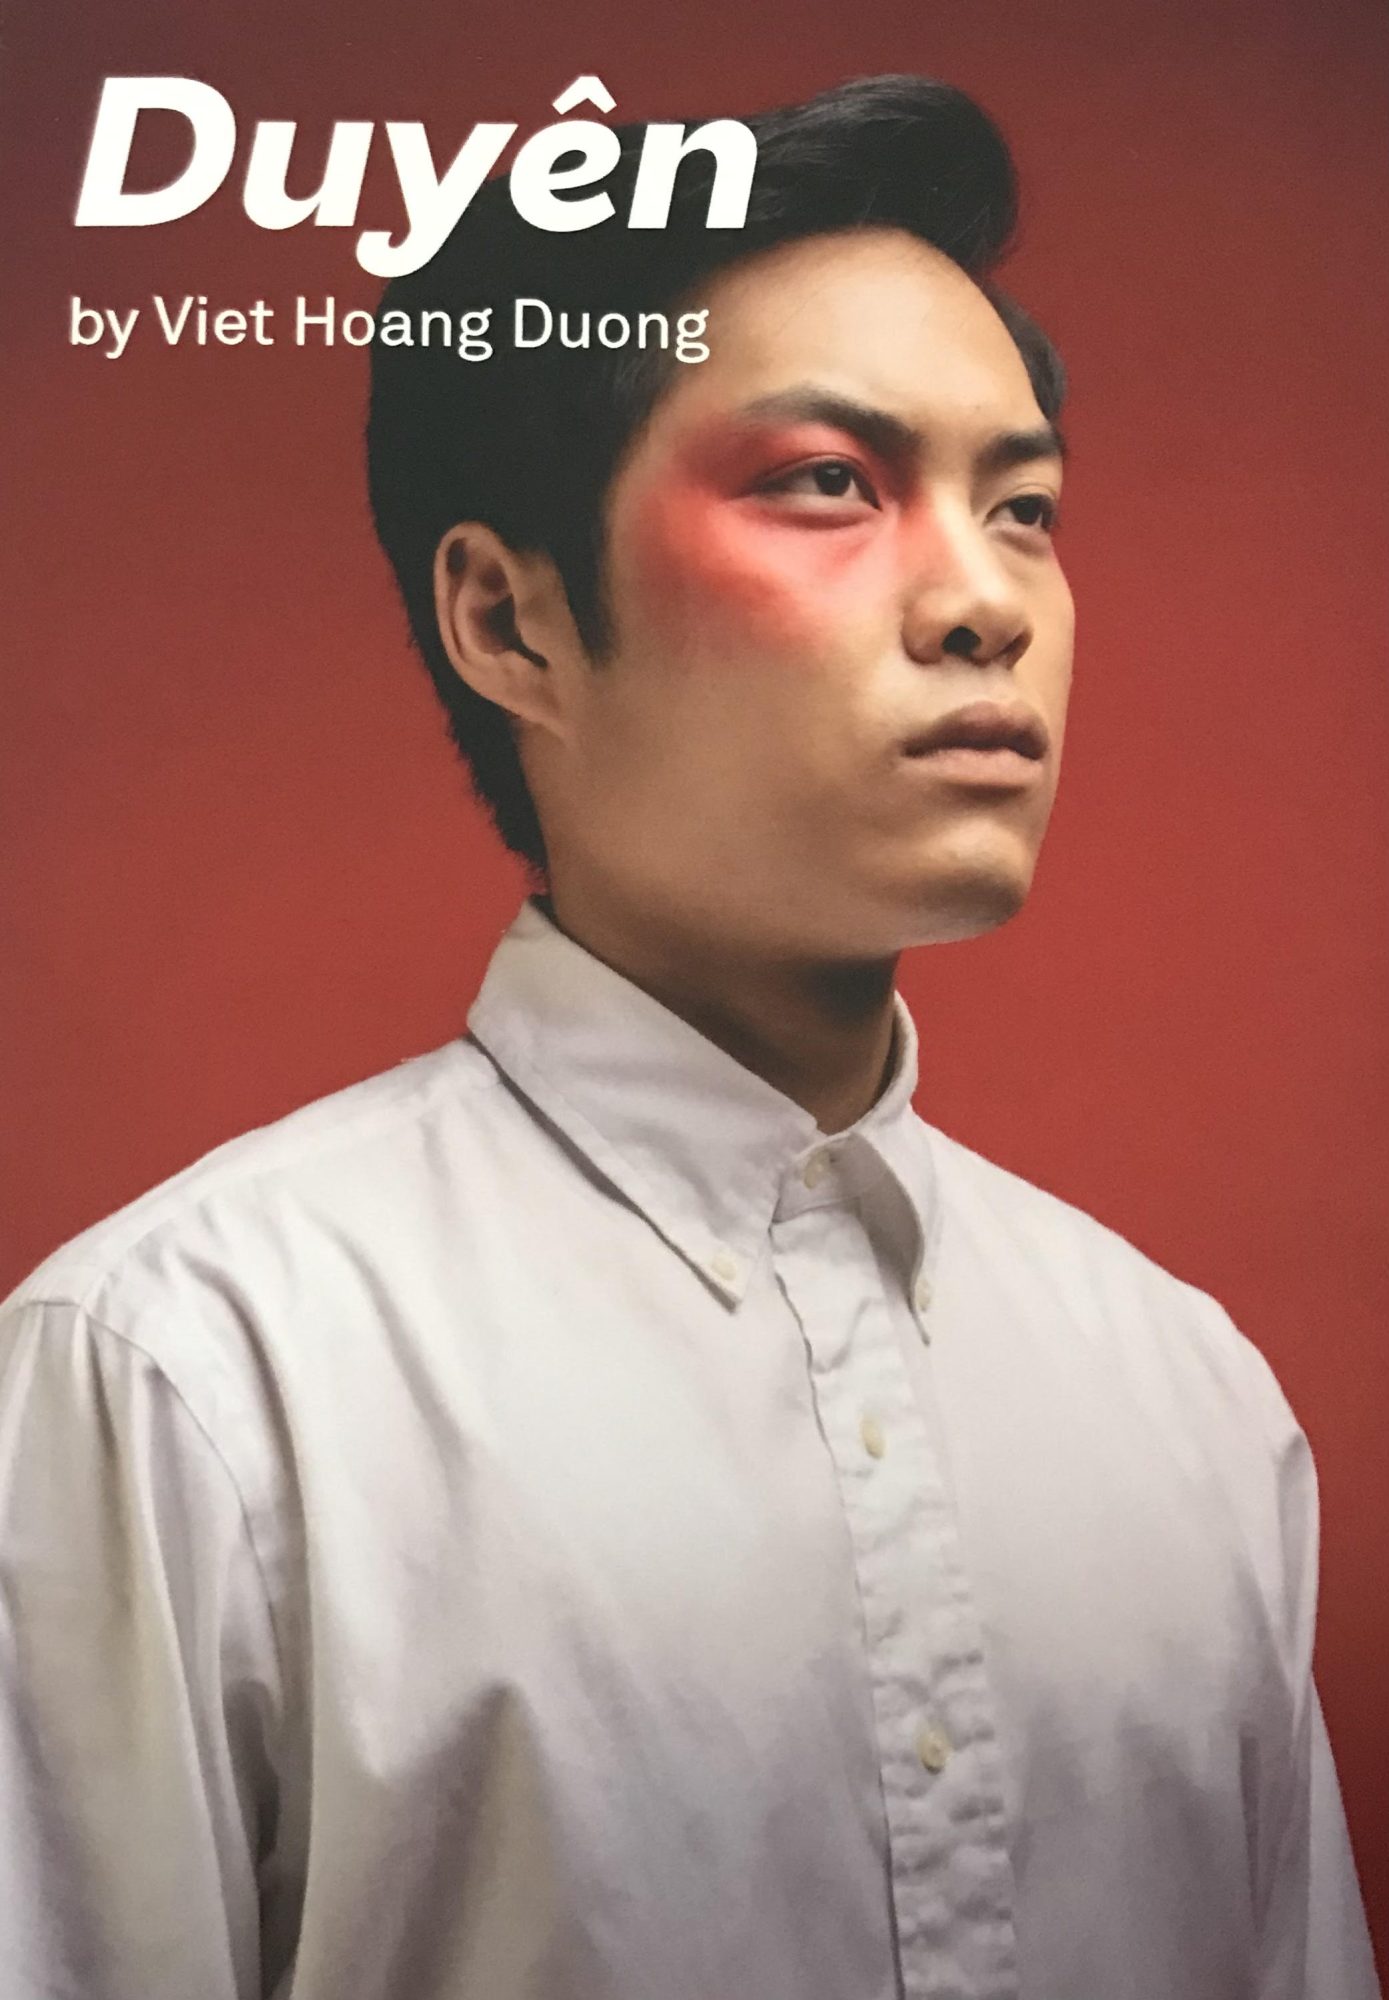 Duyen, Viet Hoang Duong